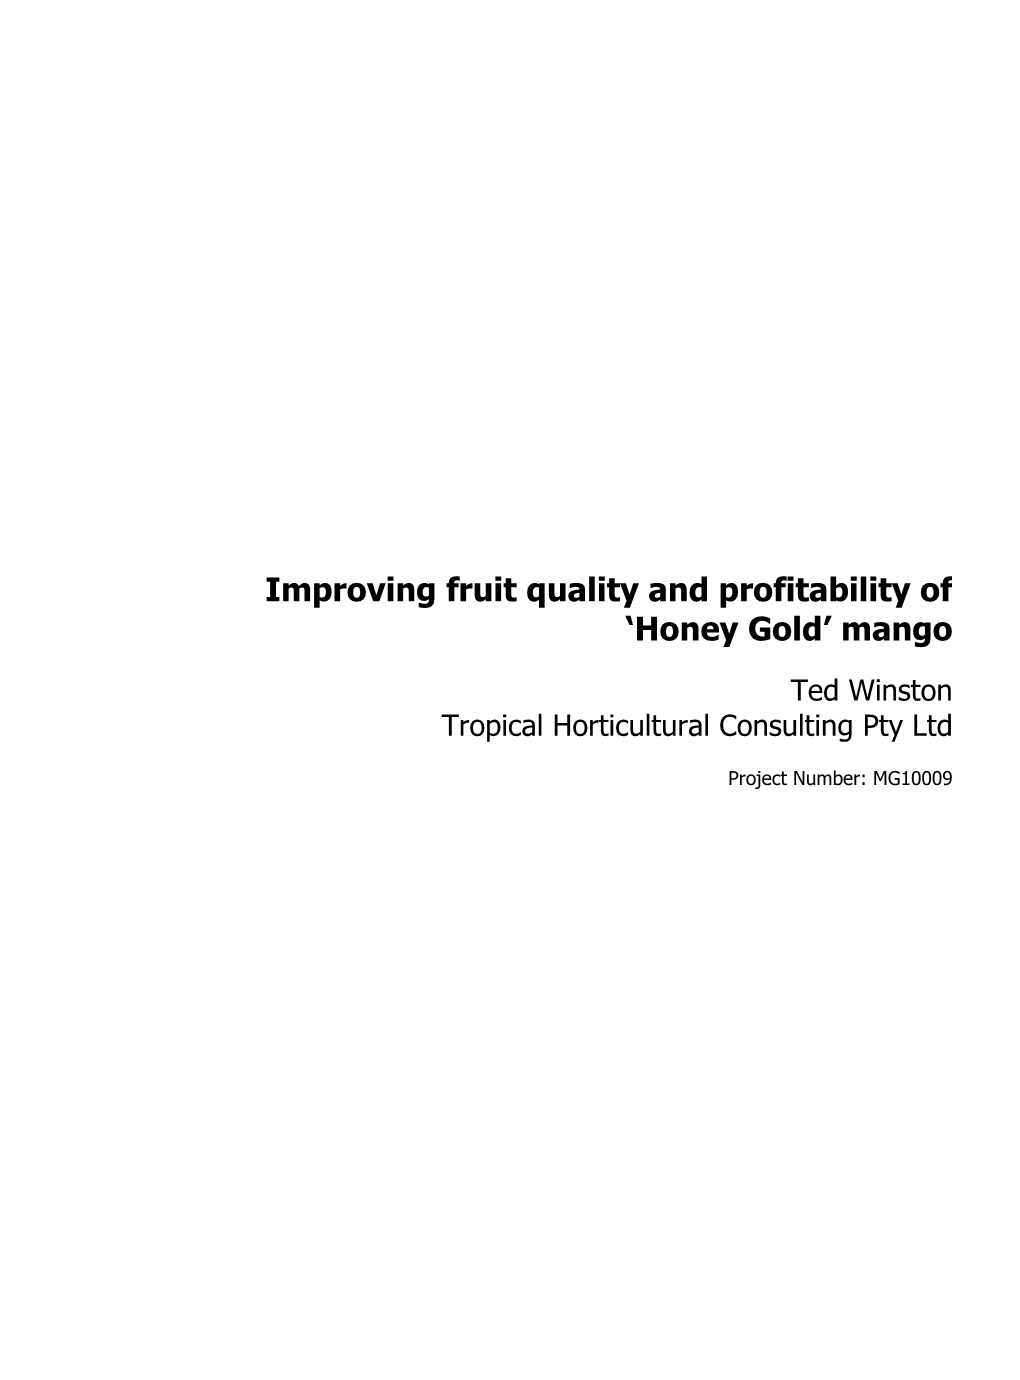 'Honey Gold' Mango